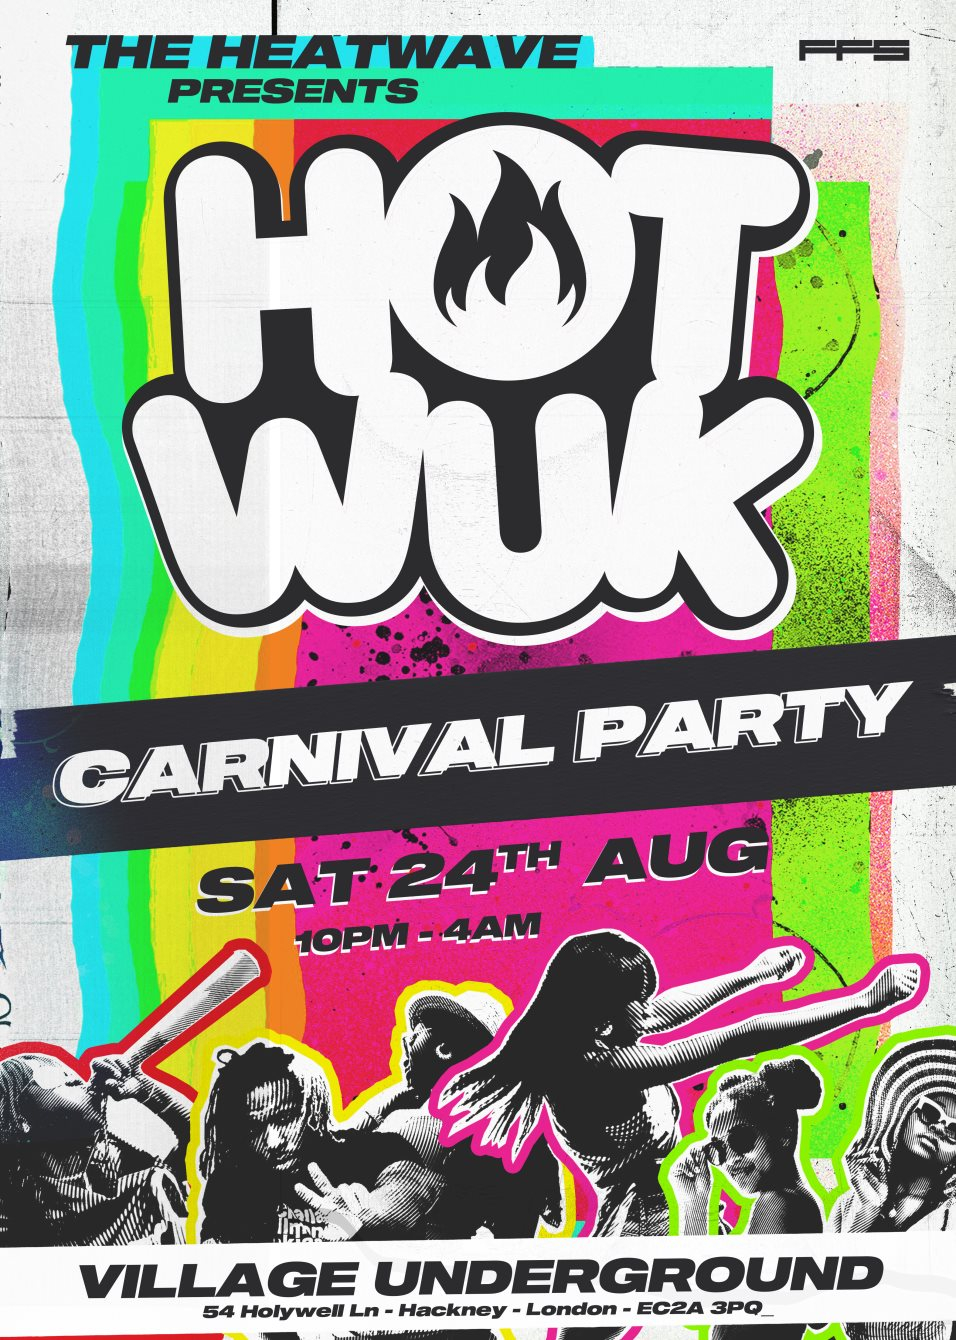 The Heatwave presents: Hot Wuk Carnival - Flyer back